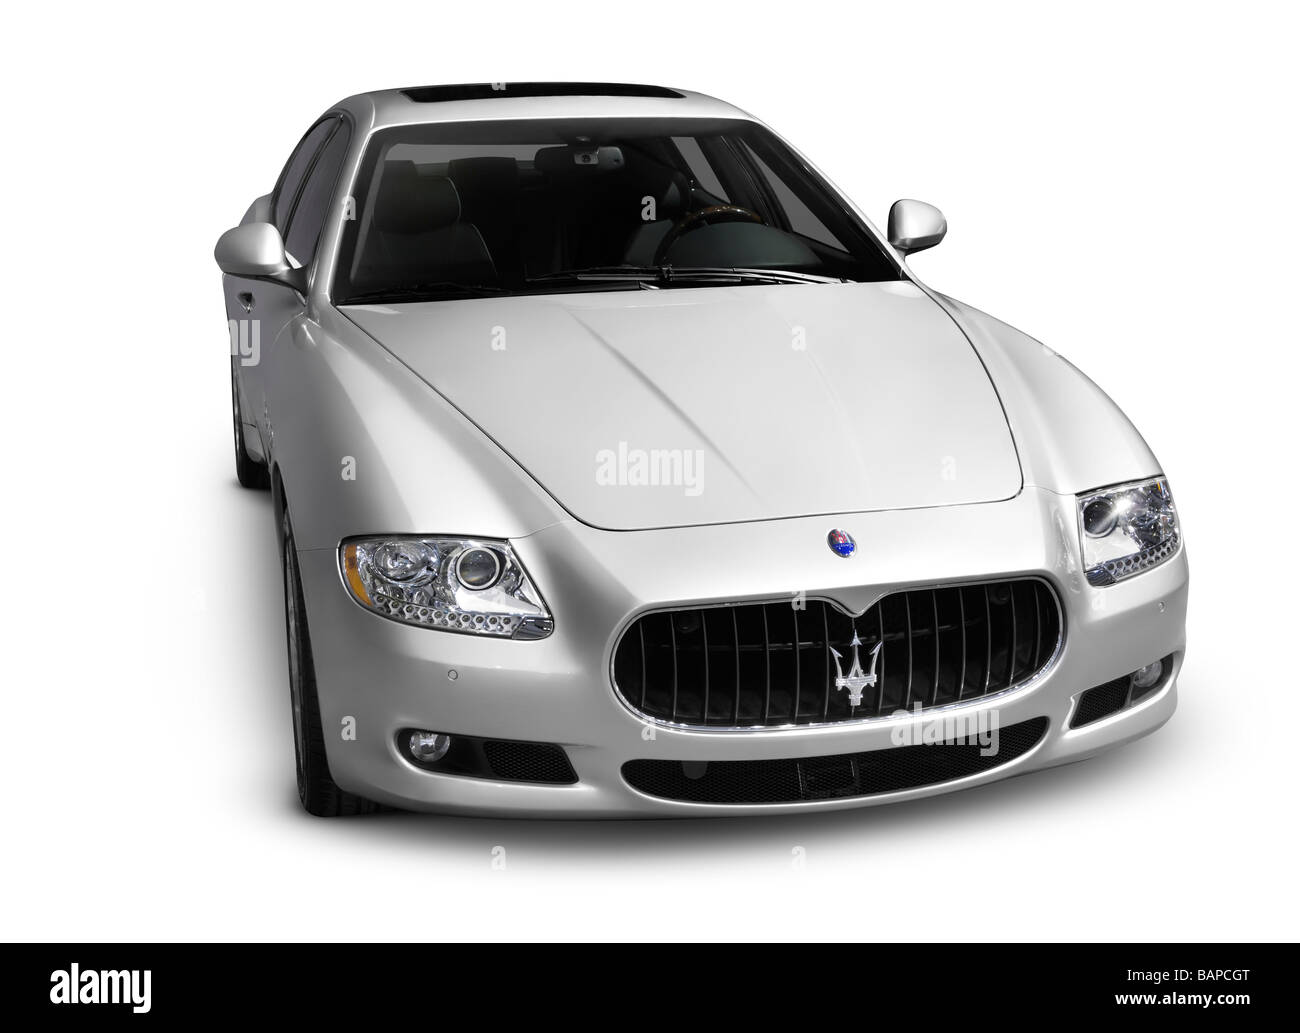 Lizenz und Drucke bei MaximImages.com - Maserati Luxusauto, Automobil Stock Foto. Stockfoto